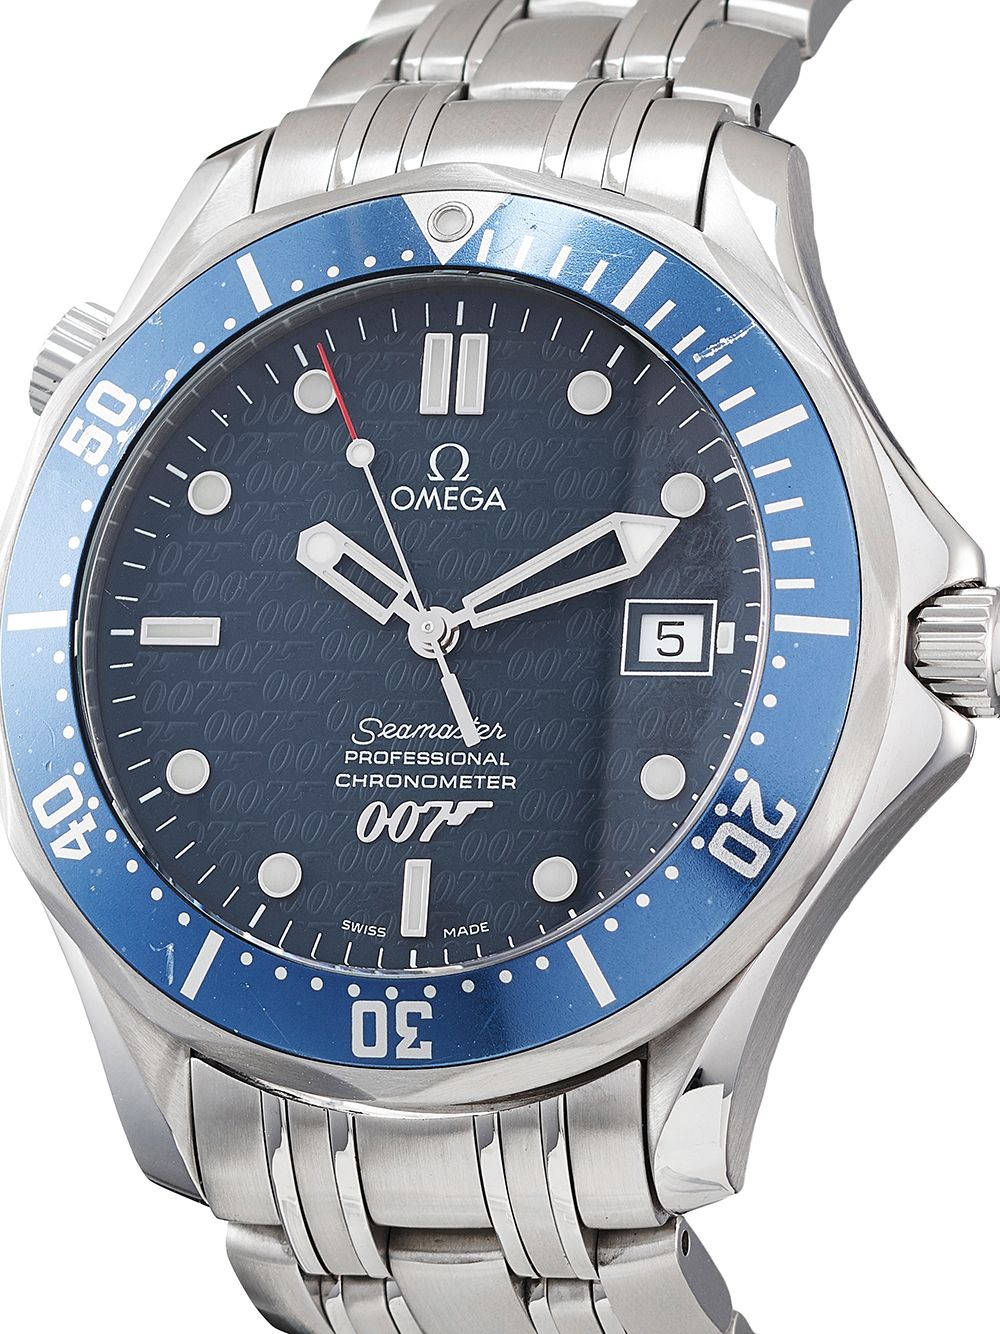 omega seamaster professional 007 price